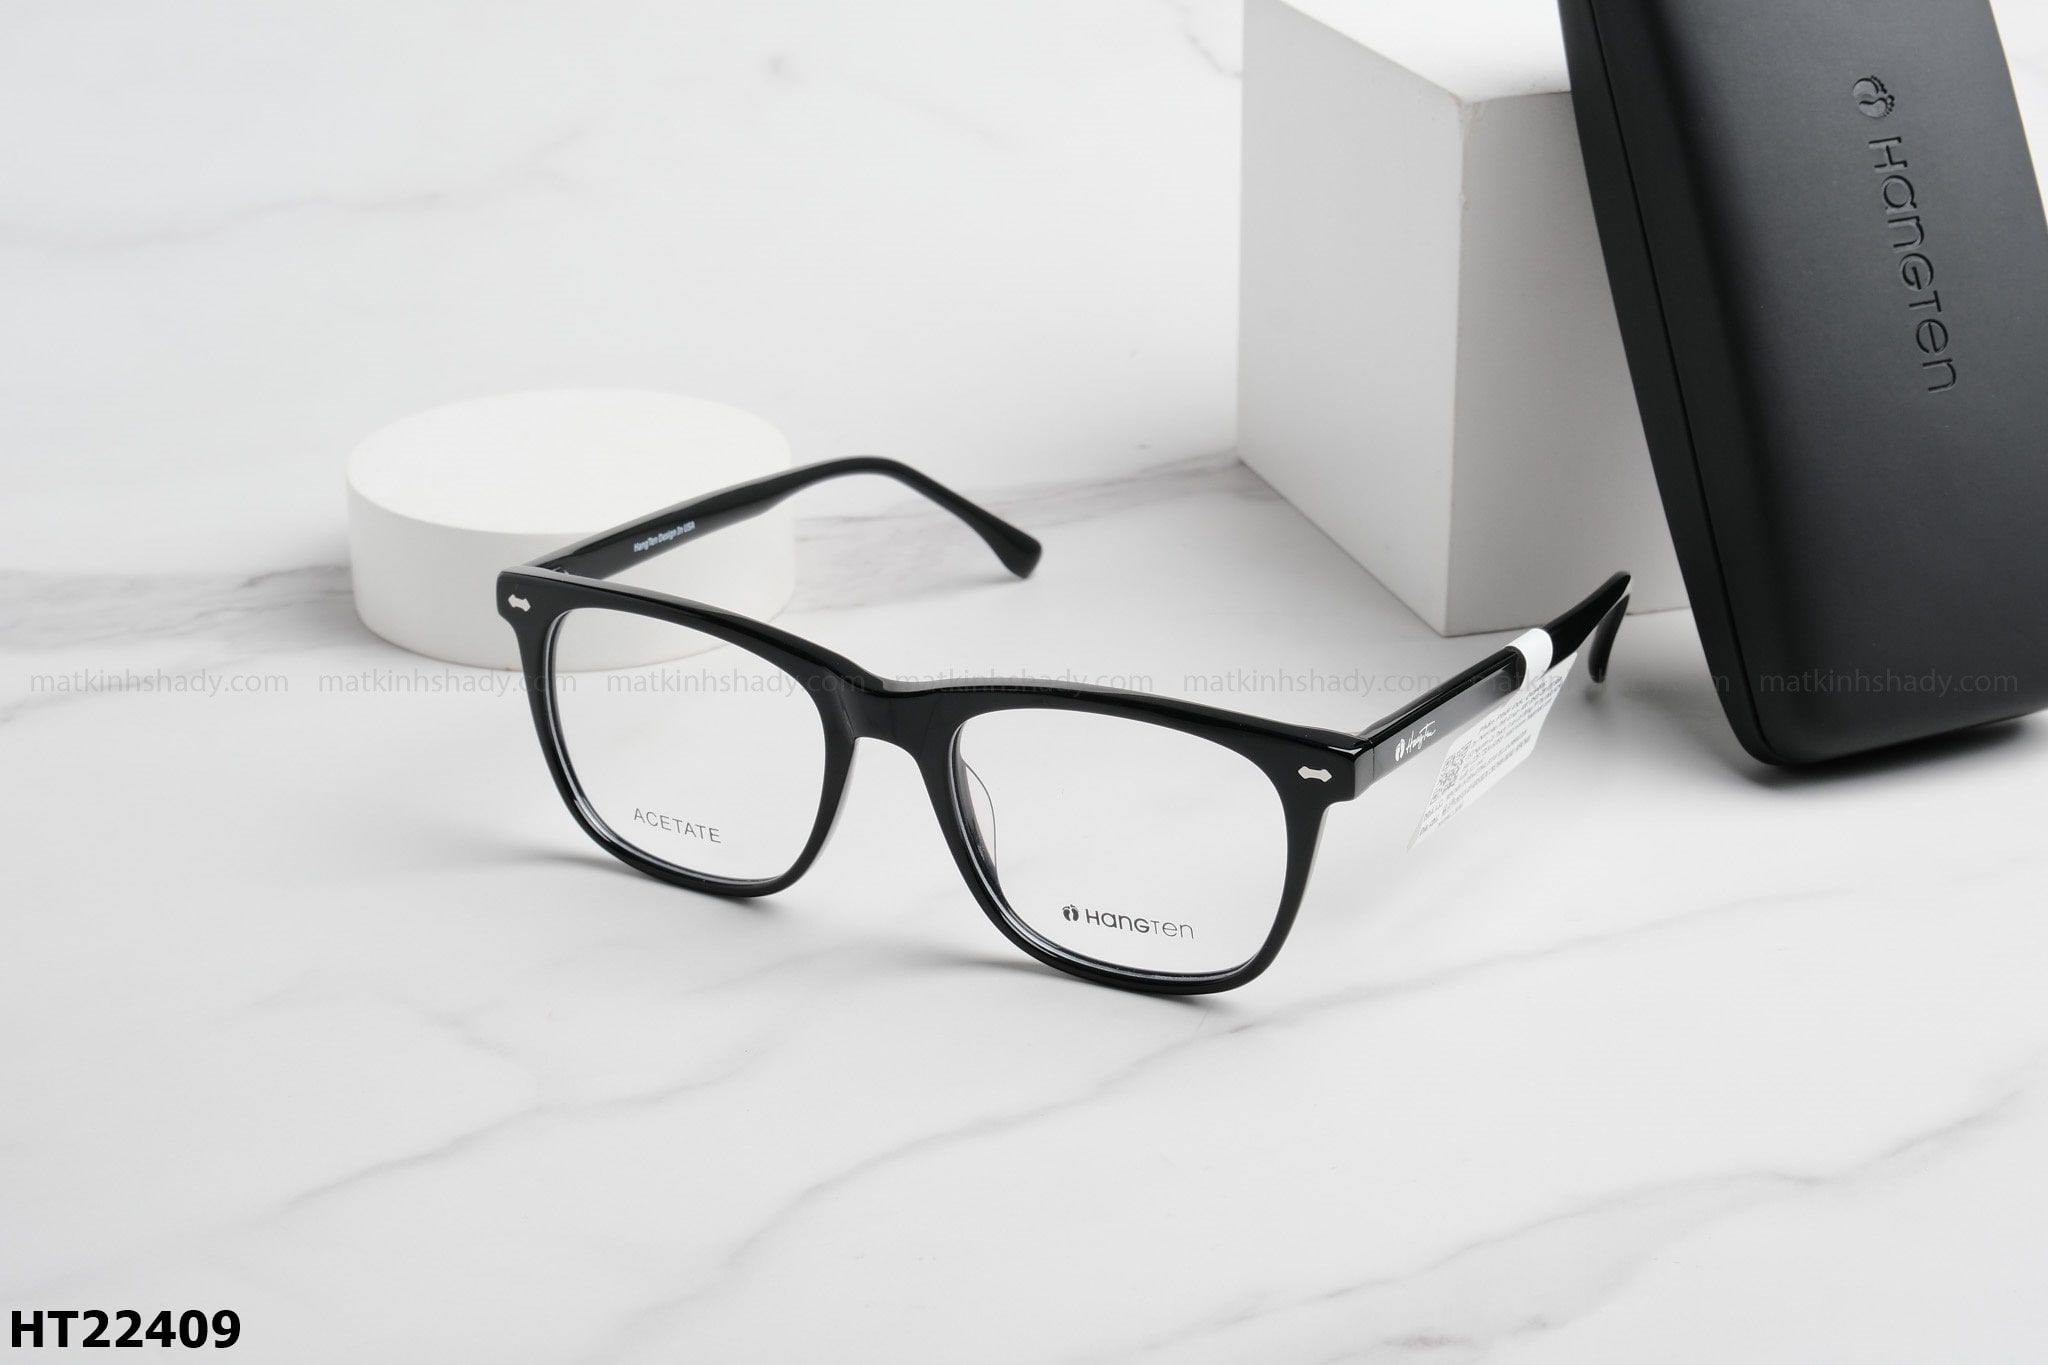  Hangten Eyewear - Glasses - HT22409 